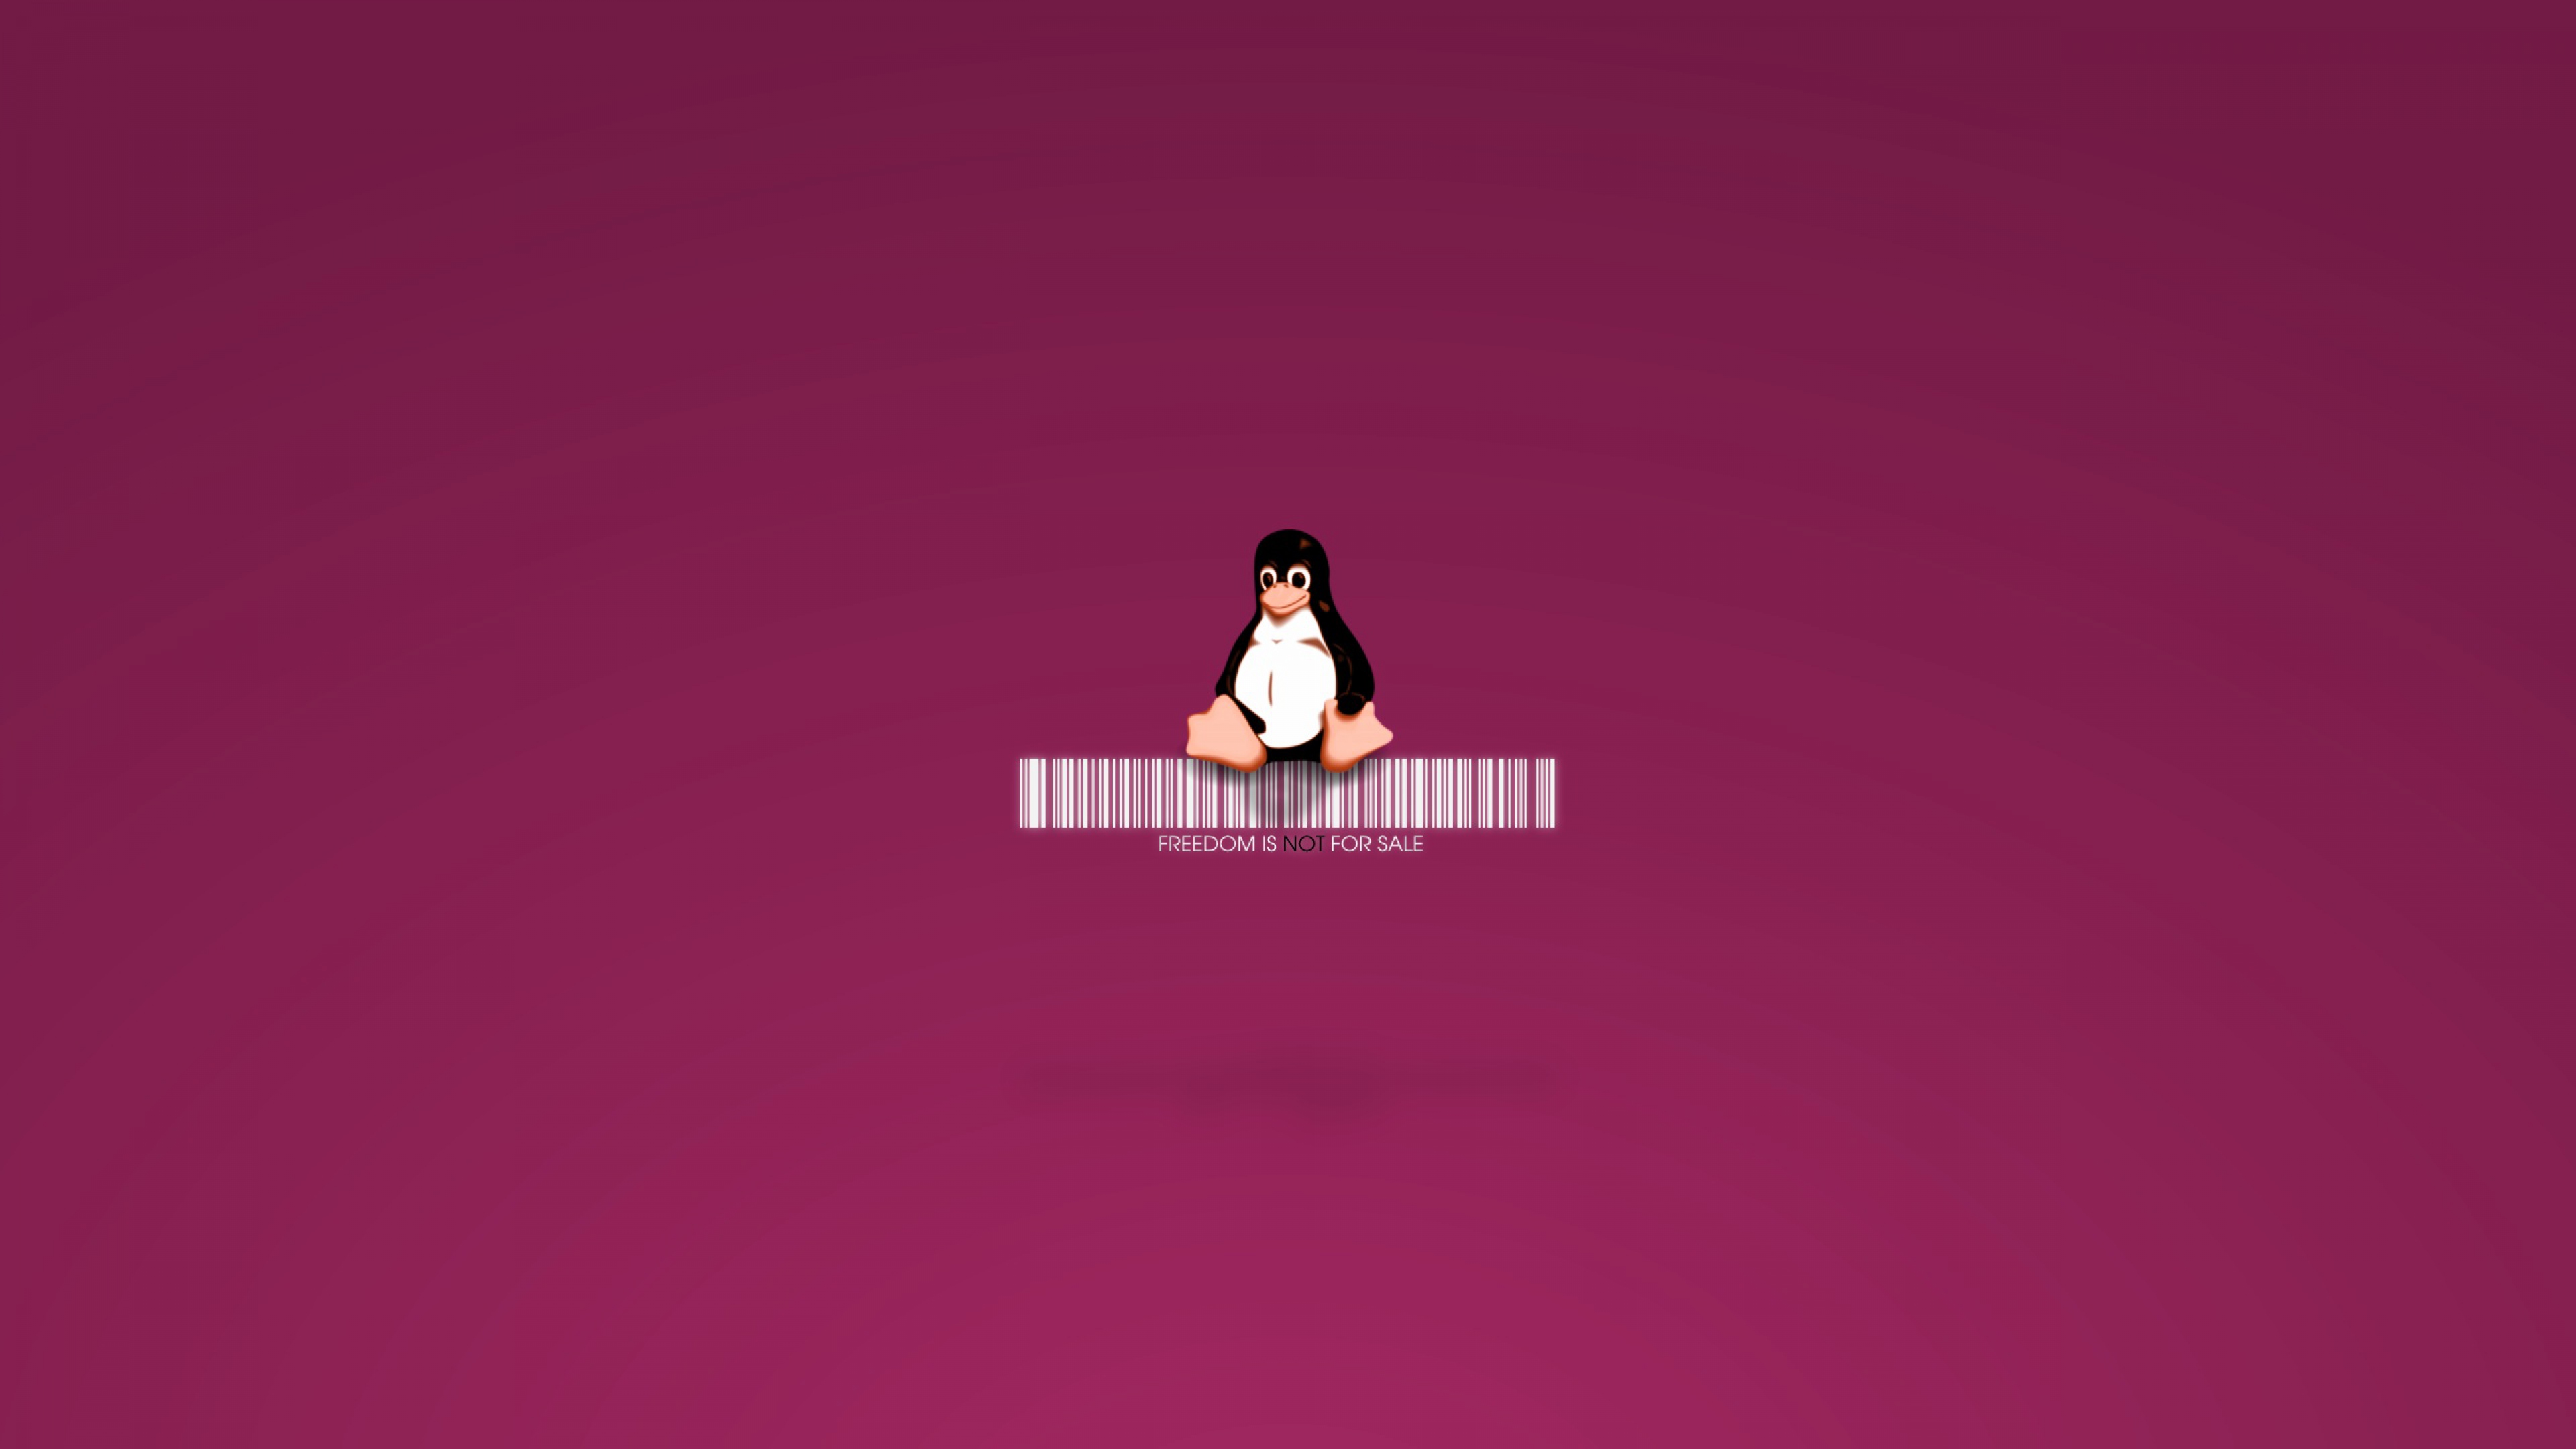 Linux Penguin Wallpaper HD Backgrounds